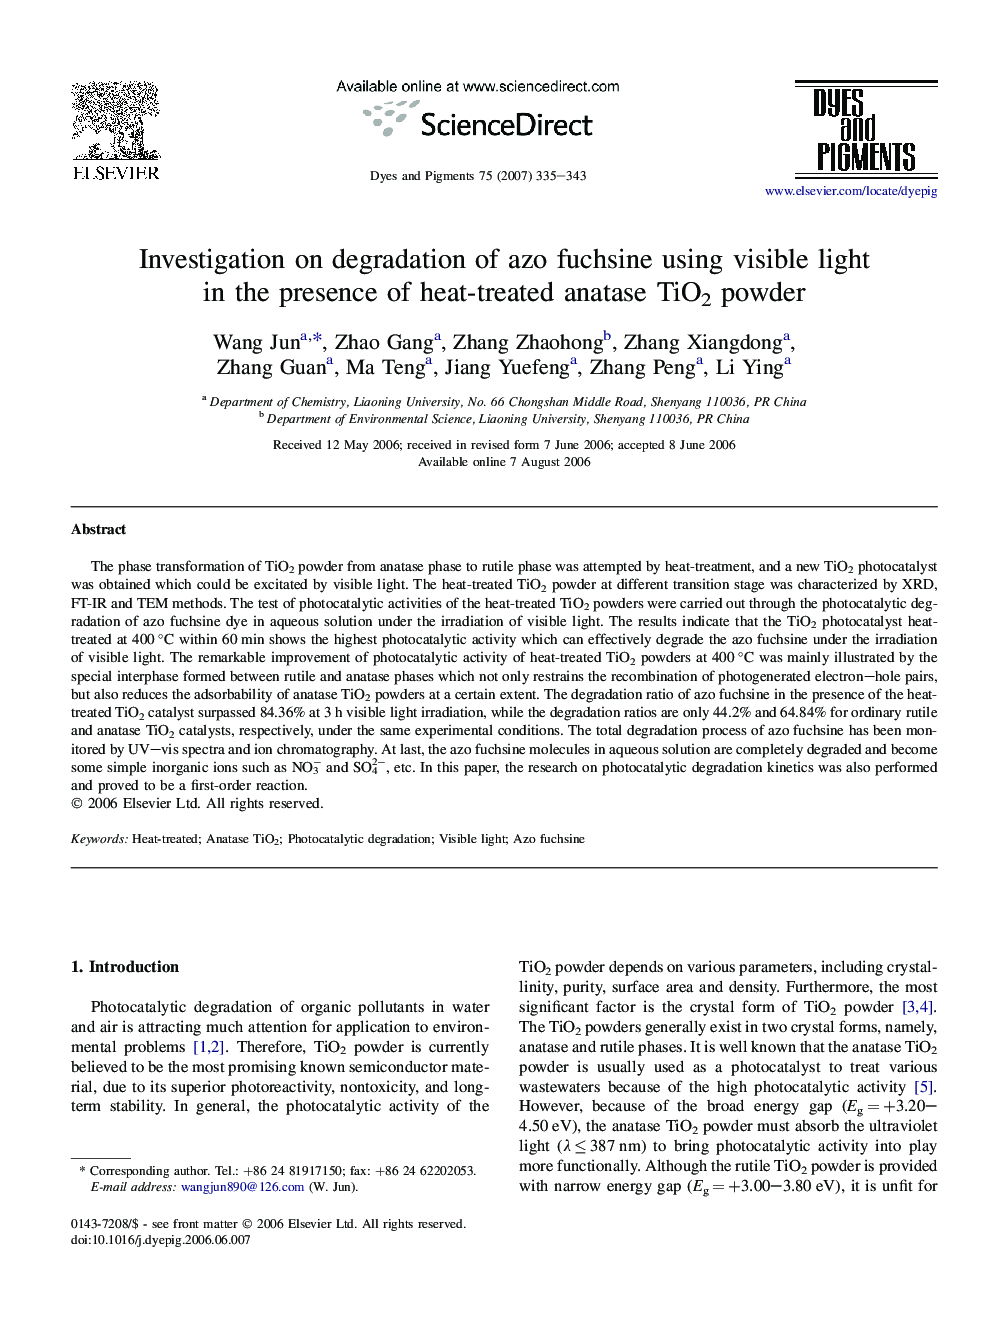 Investigation on degradation of azo fuchsine using visible light in the presence of heat-treated anatase TiO2 powder